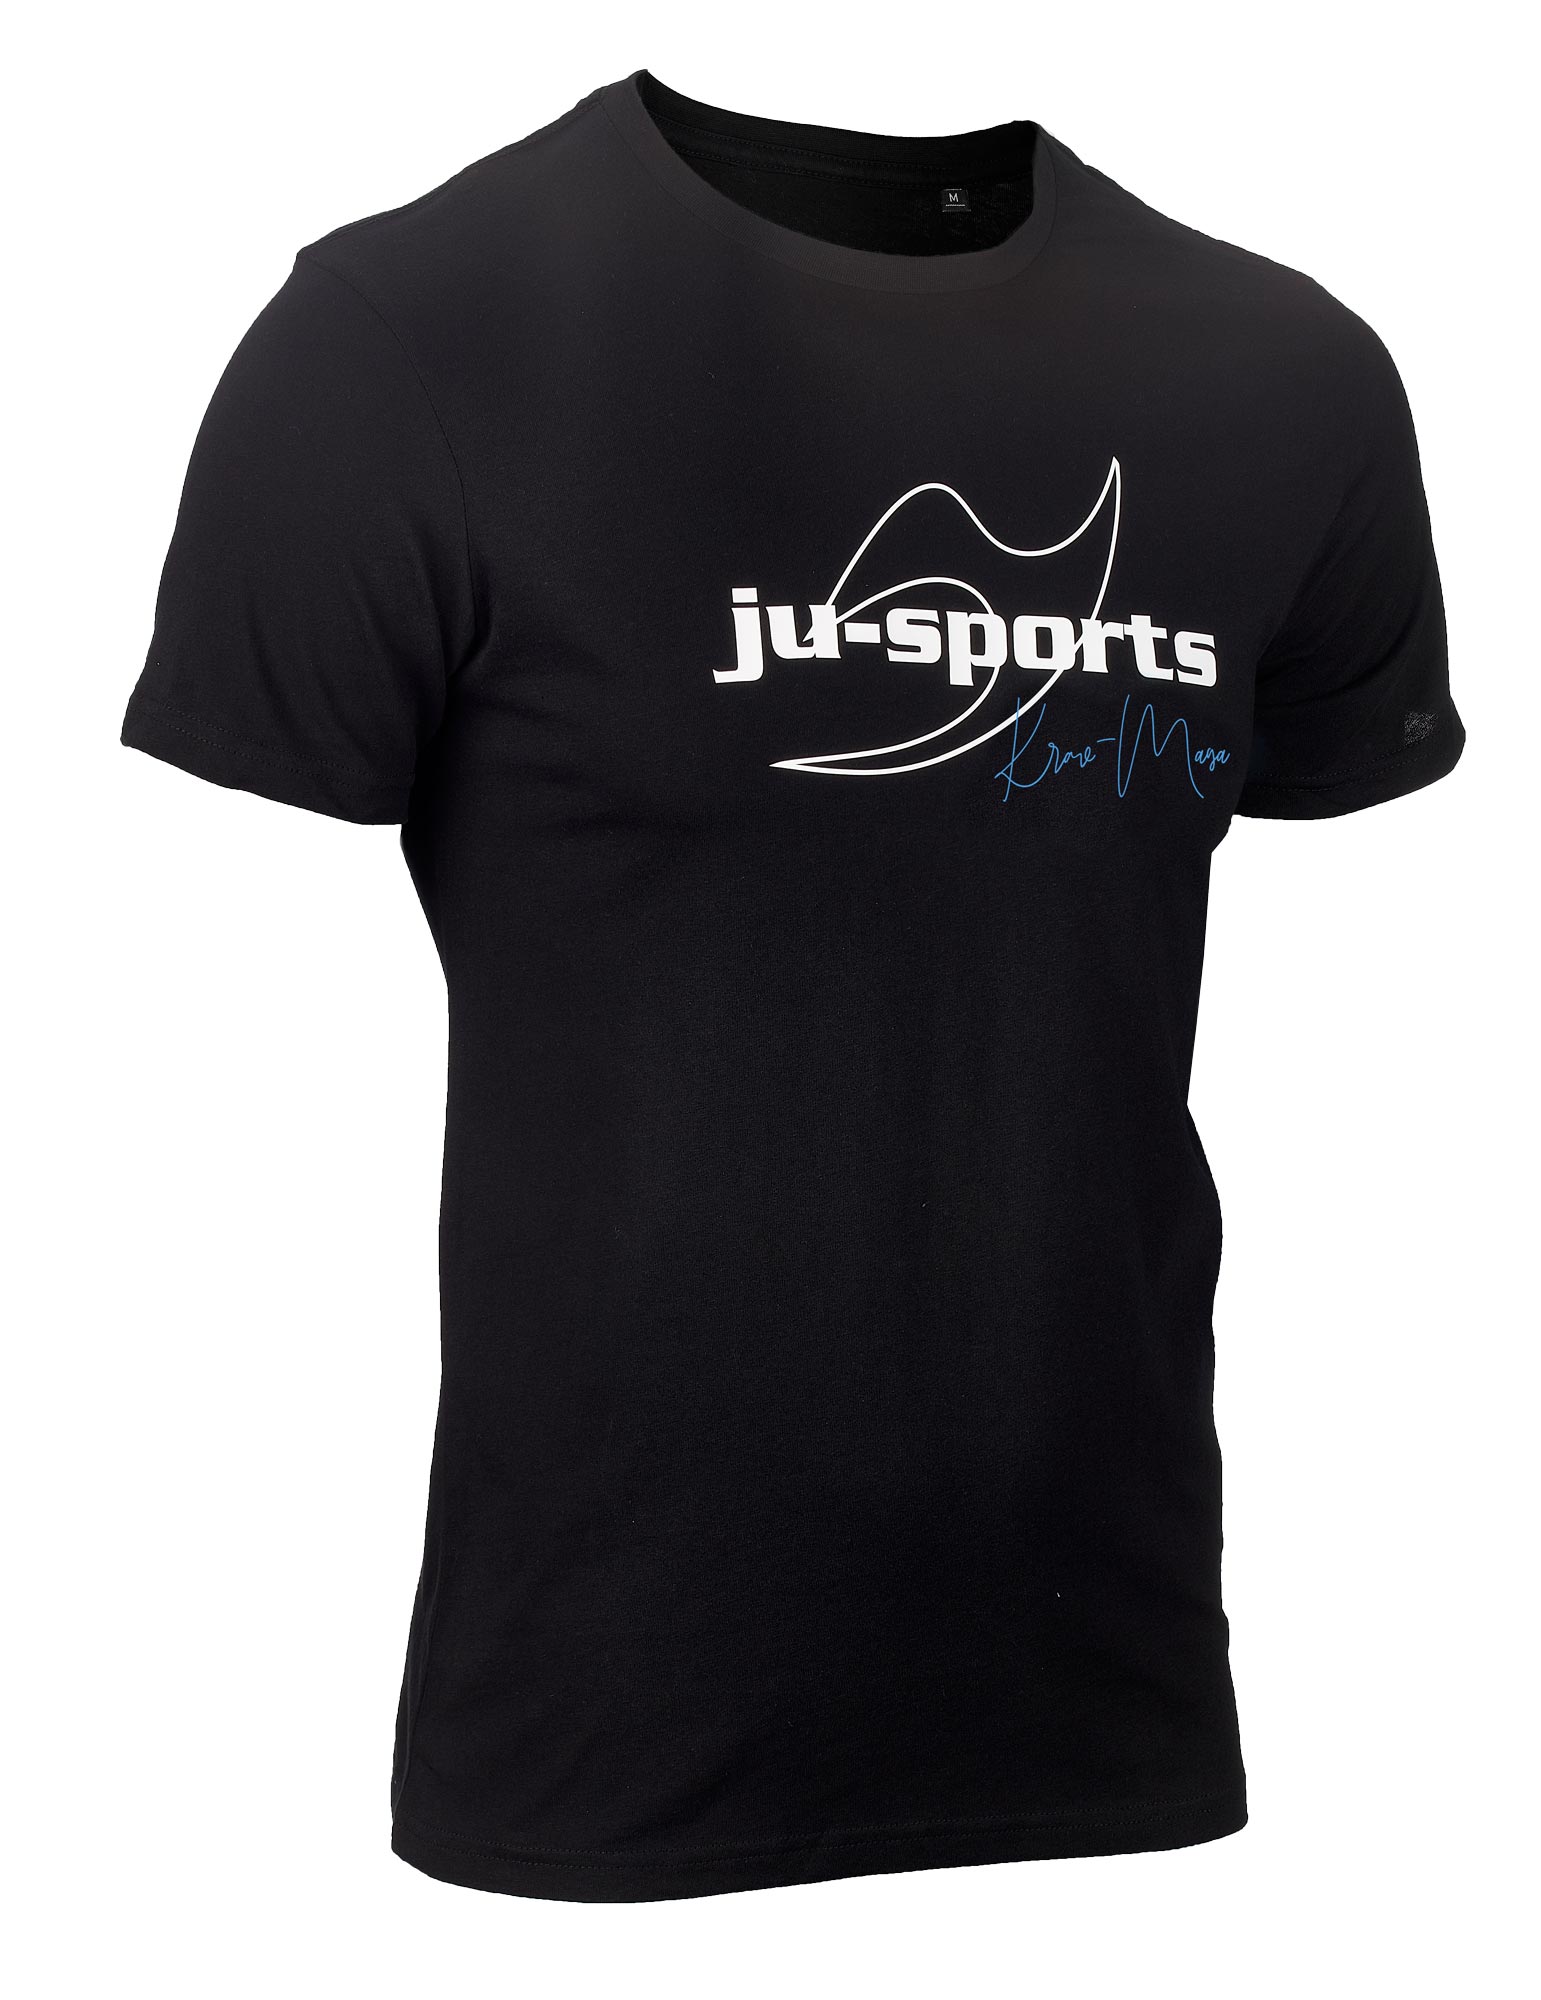 Ju-Sports Signature Line "Krav Maga" T-Shirt